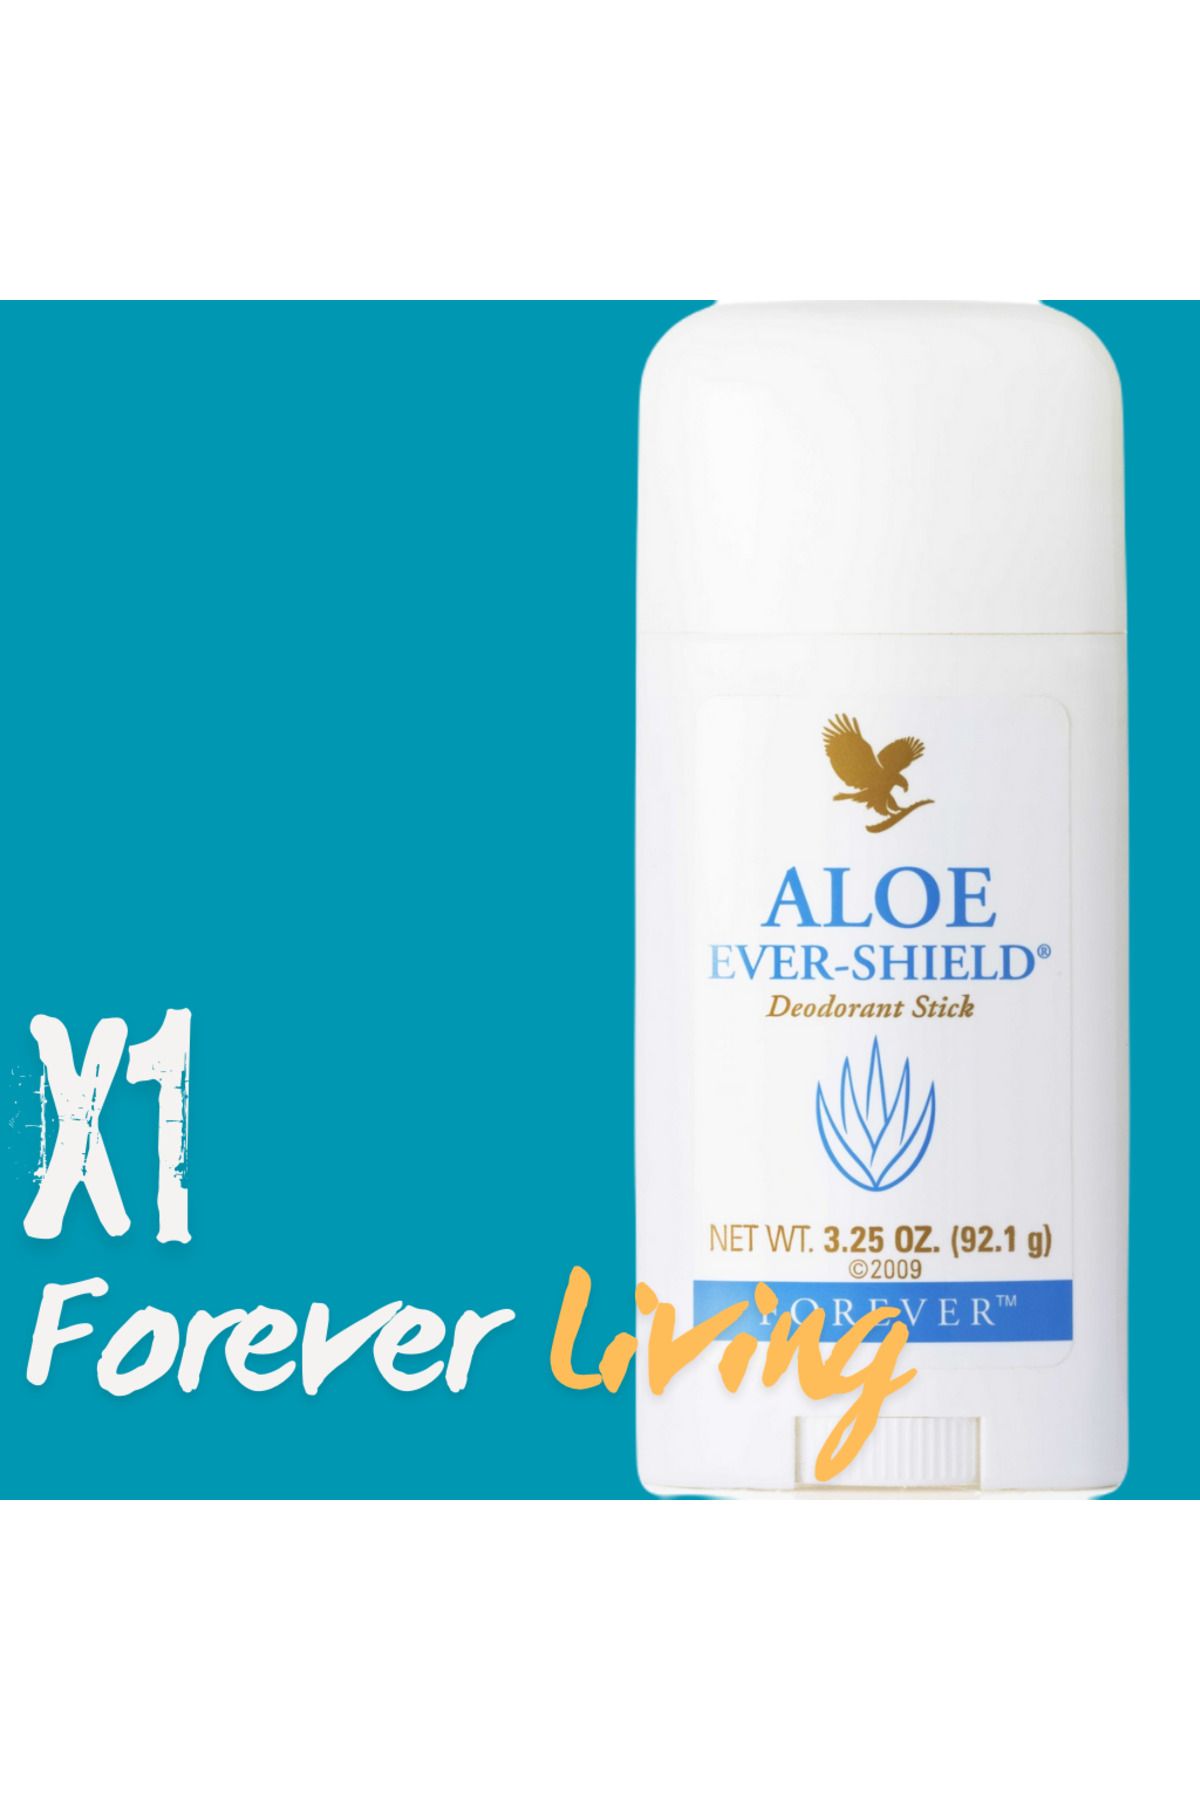 Forever Living Aloe Ever-shield Deodorant